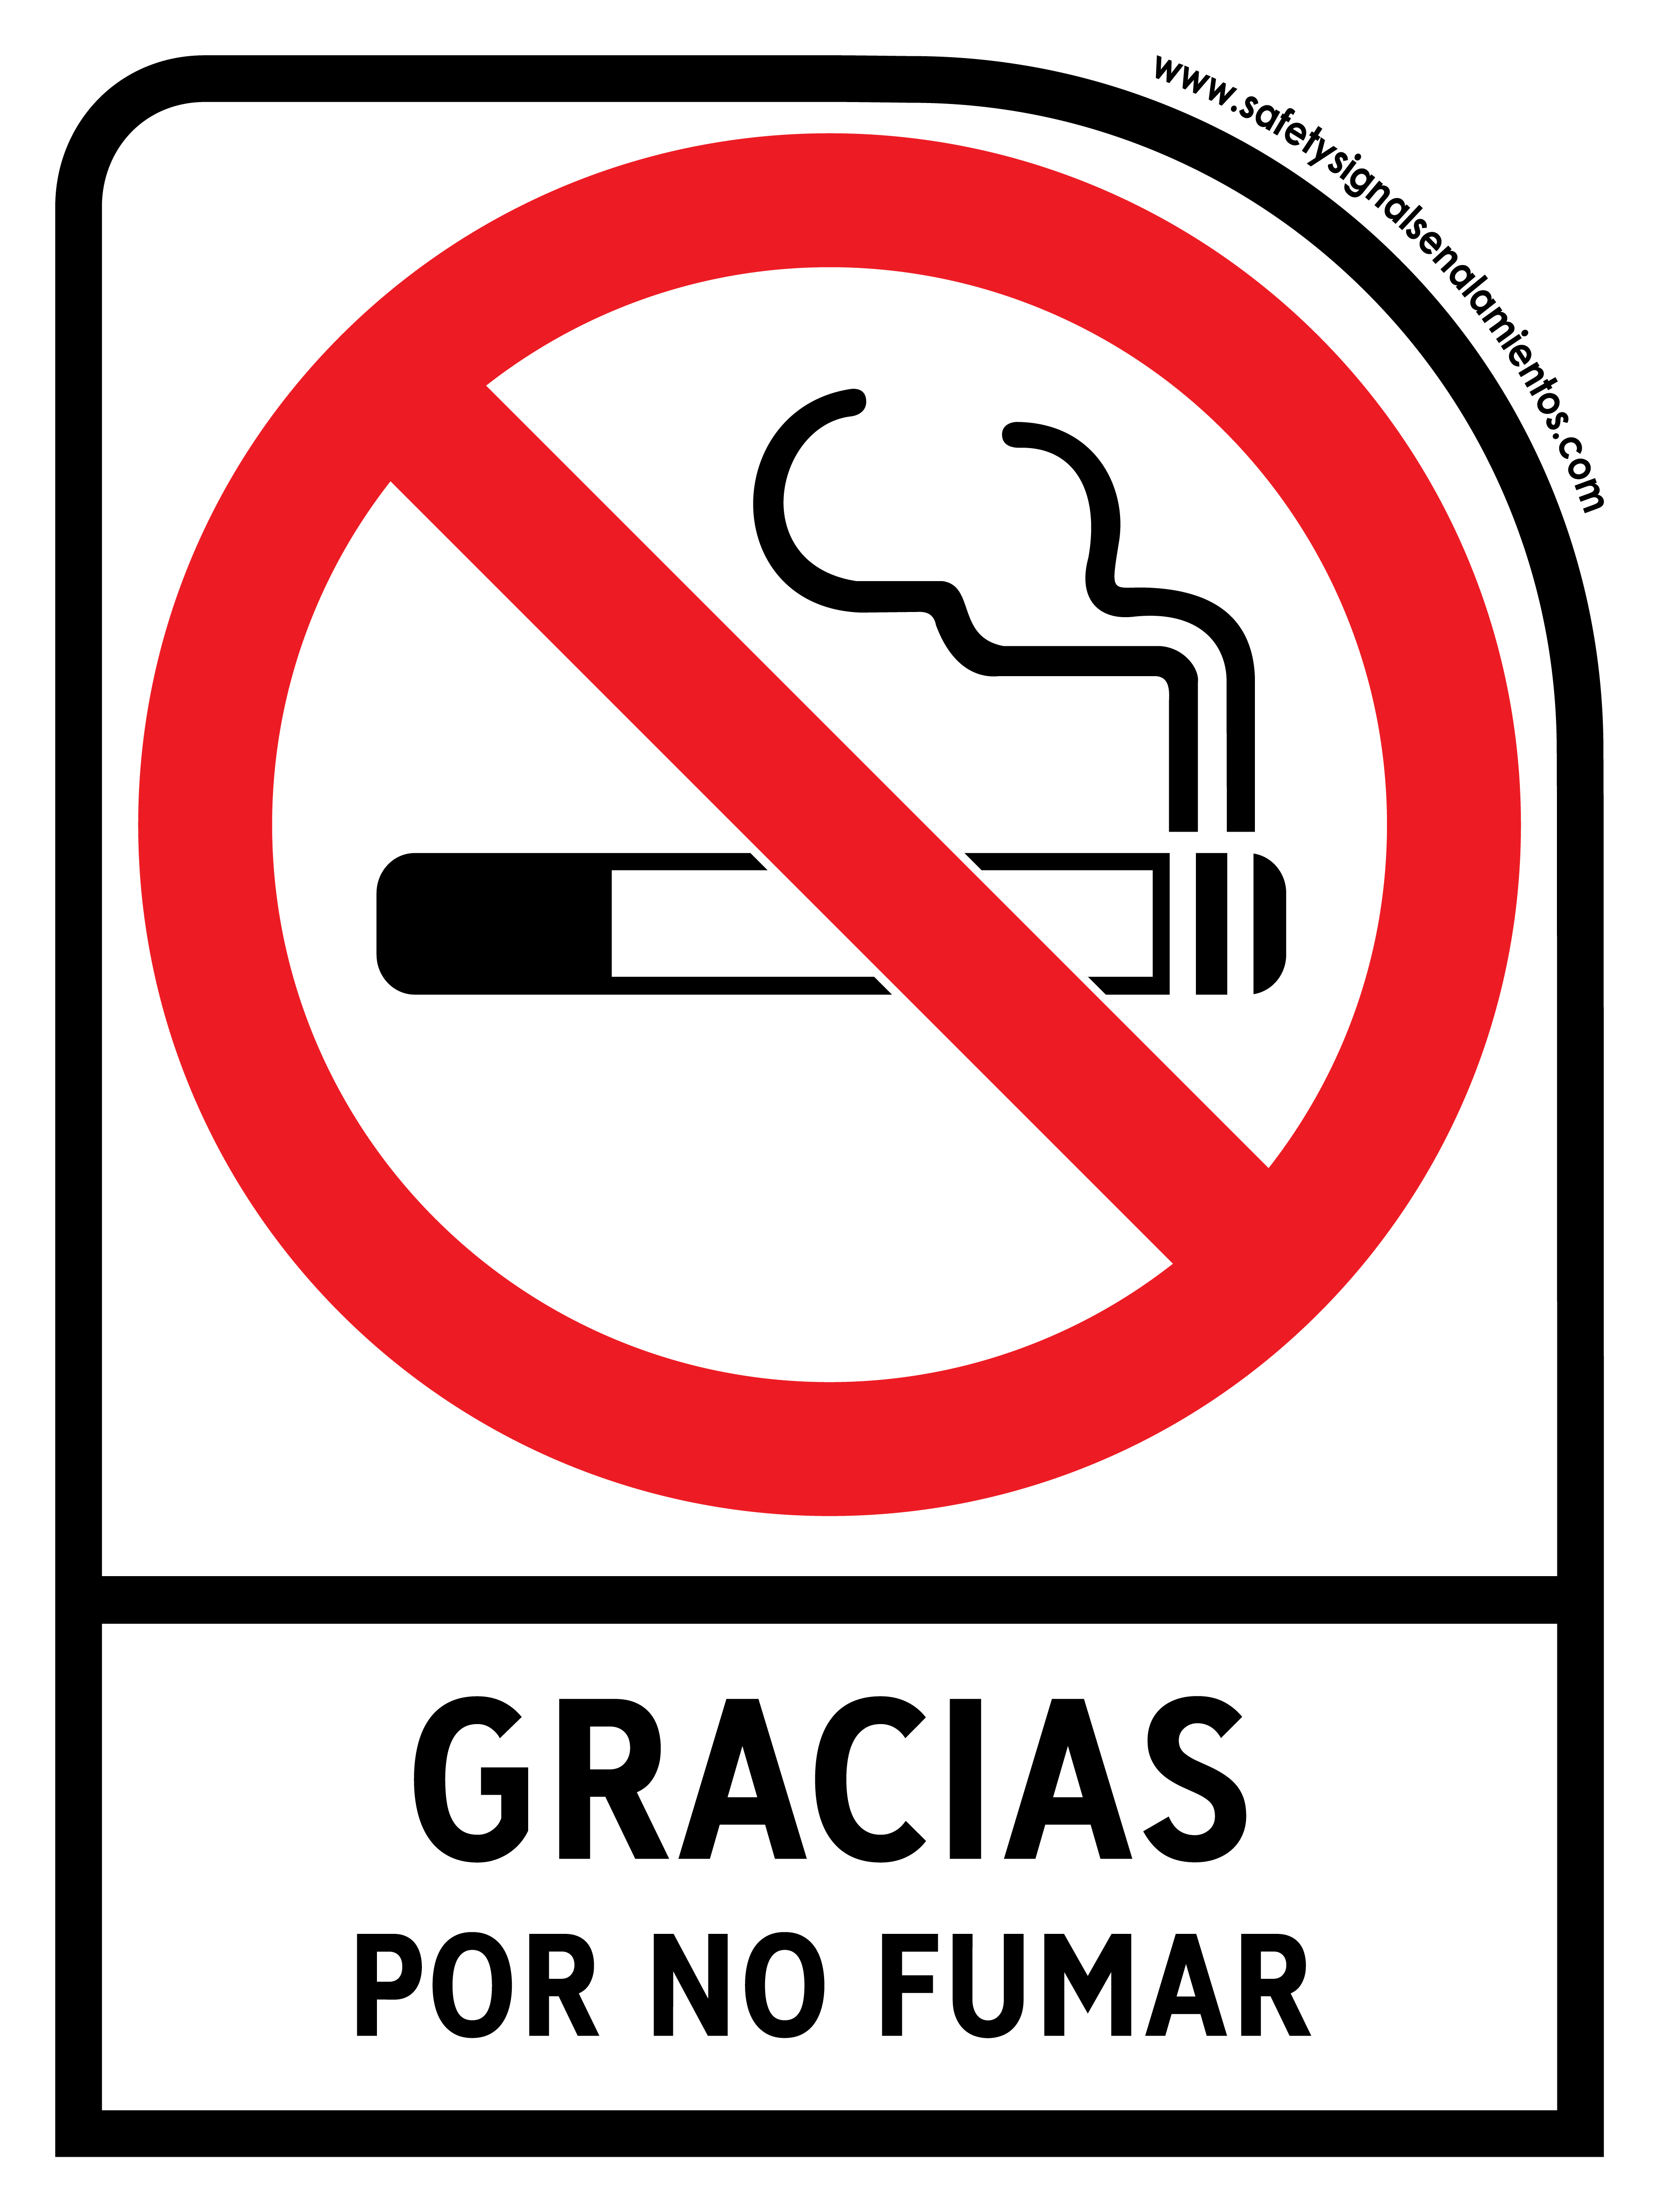 GRACIAS POR NO FUMAR - Safetysignal